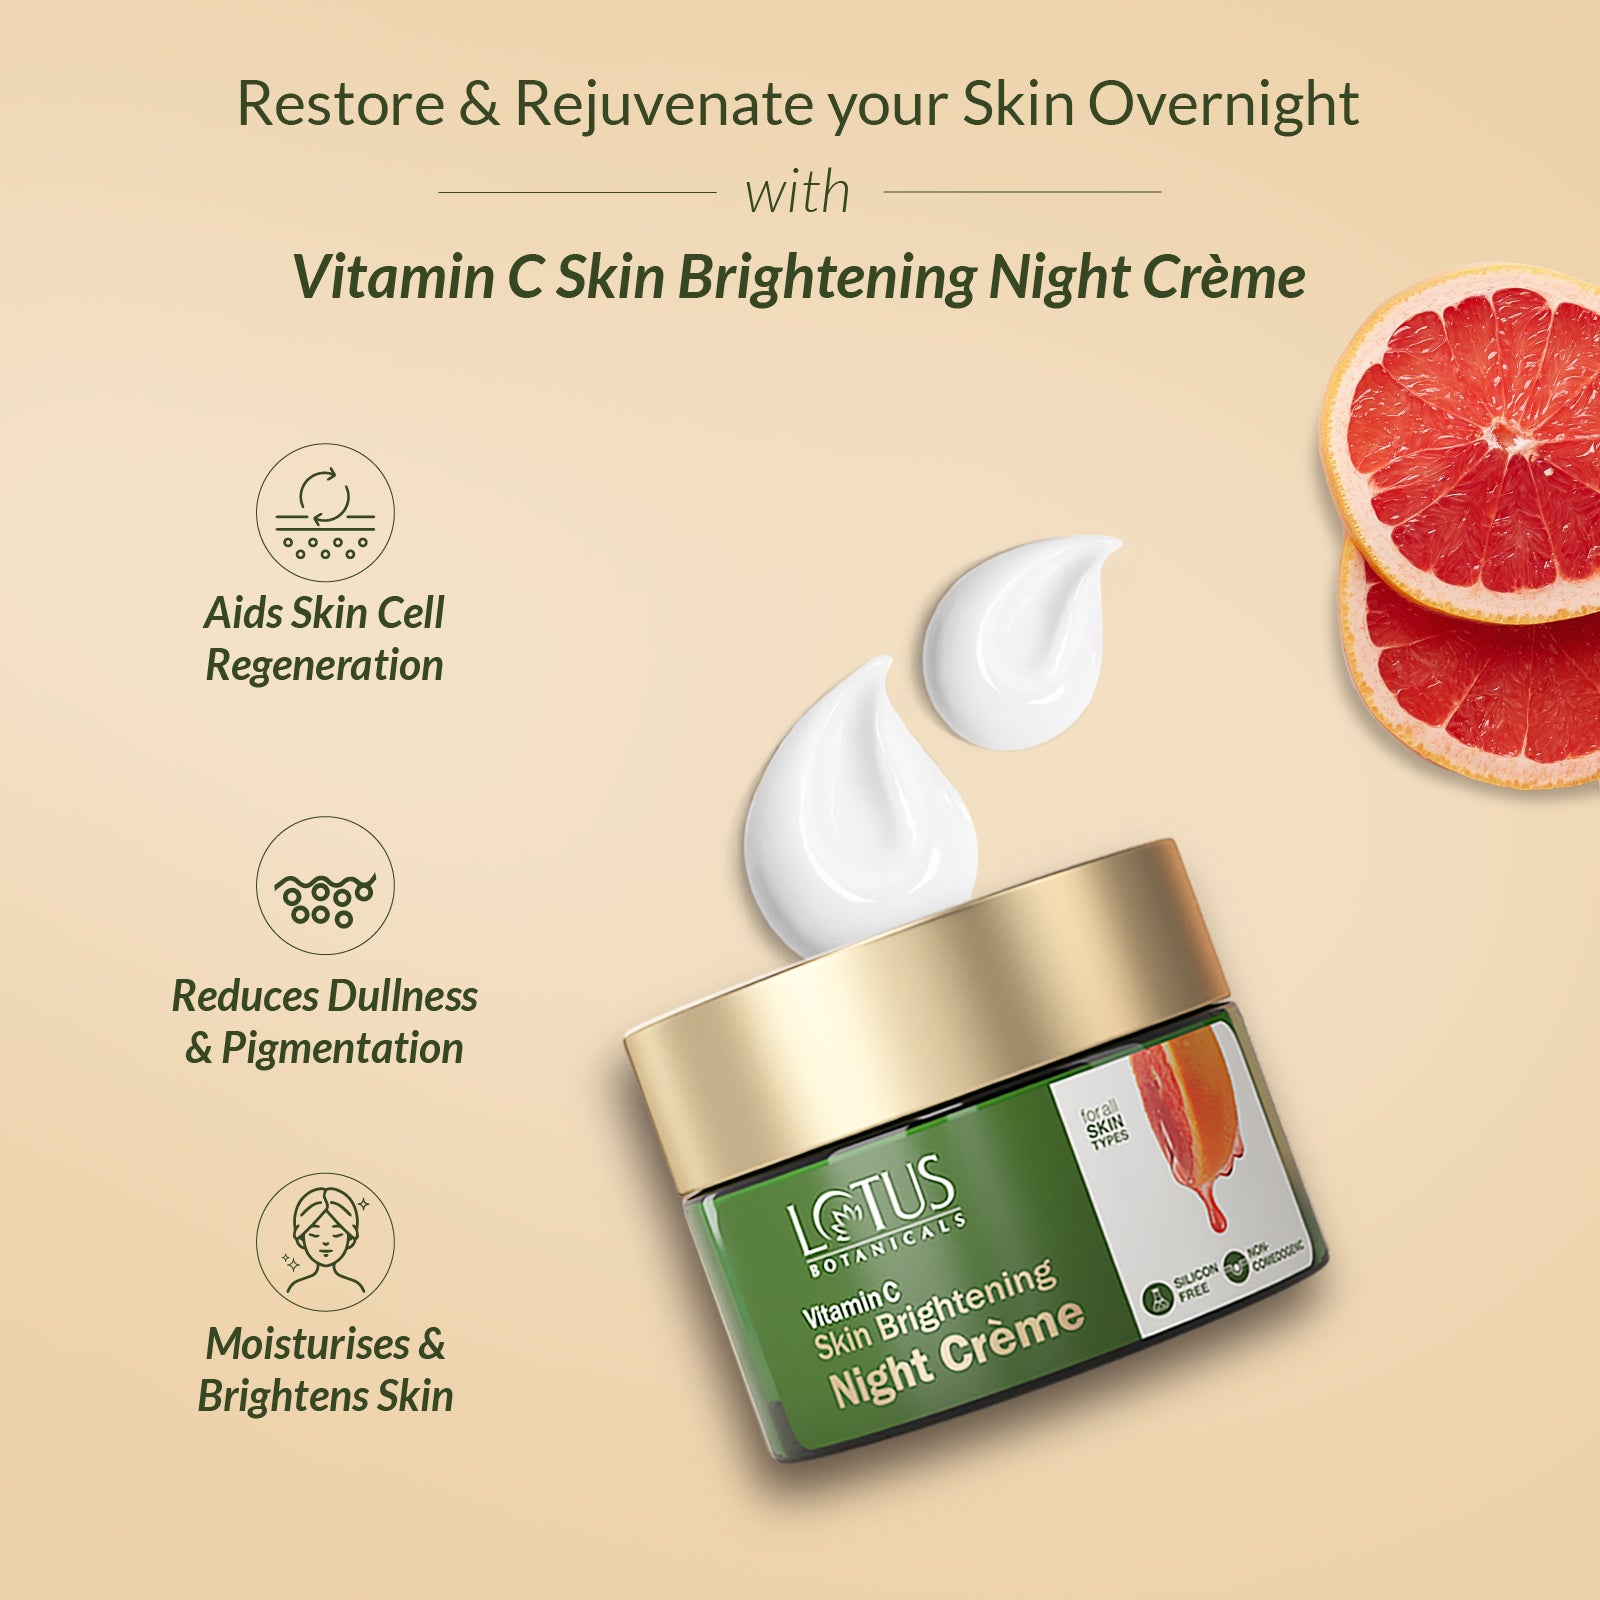 Vitamin C Skin Brightening Night Crème